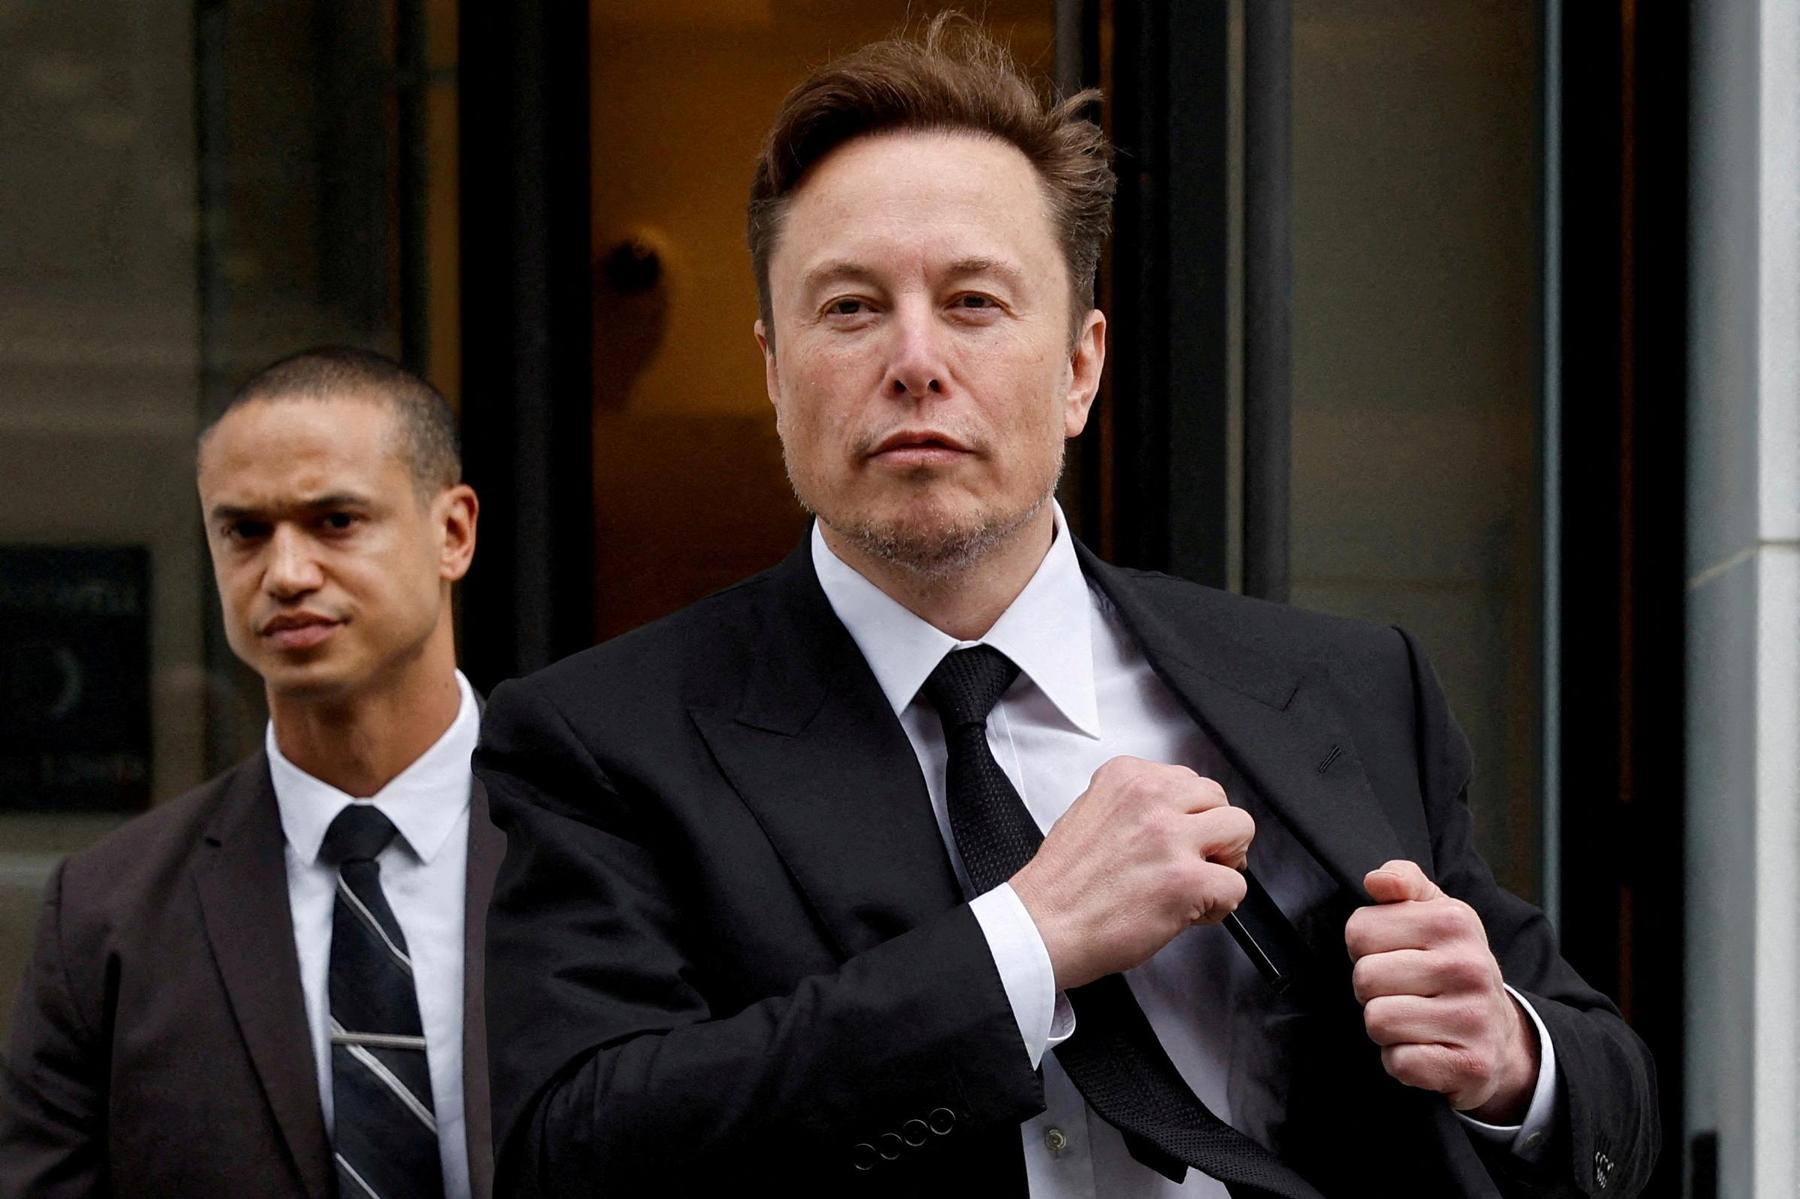 Elon Musk muss wegen Twitter-Übernahme aussagen und fühlt sich belästigt